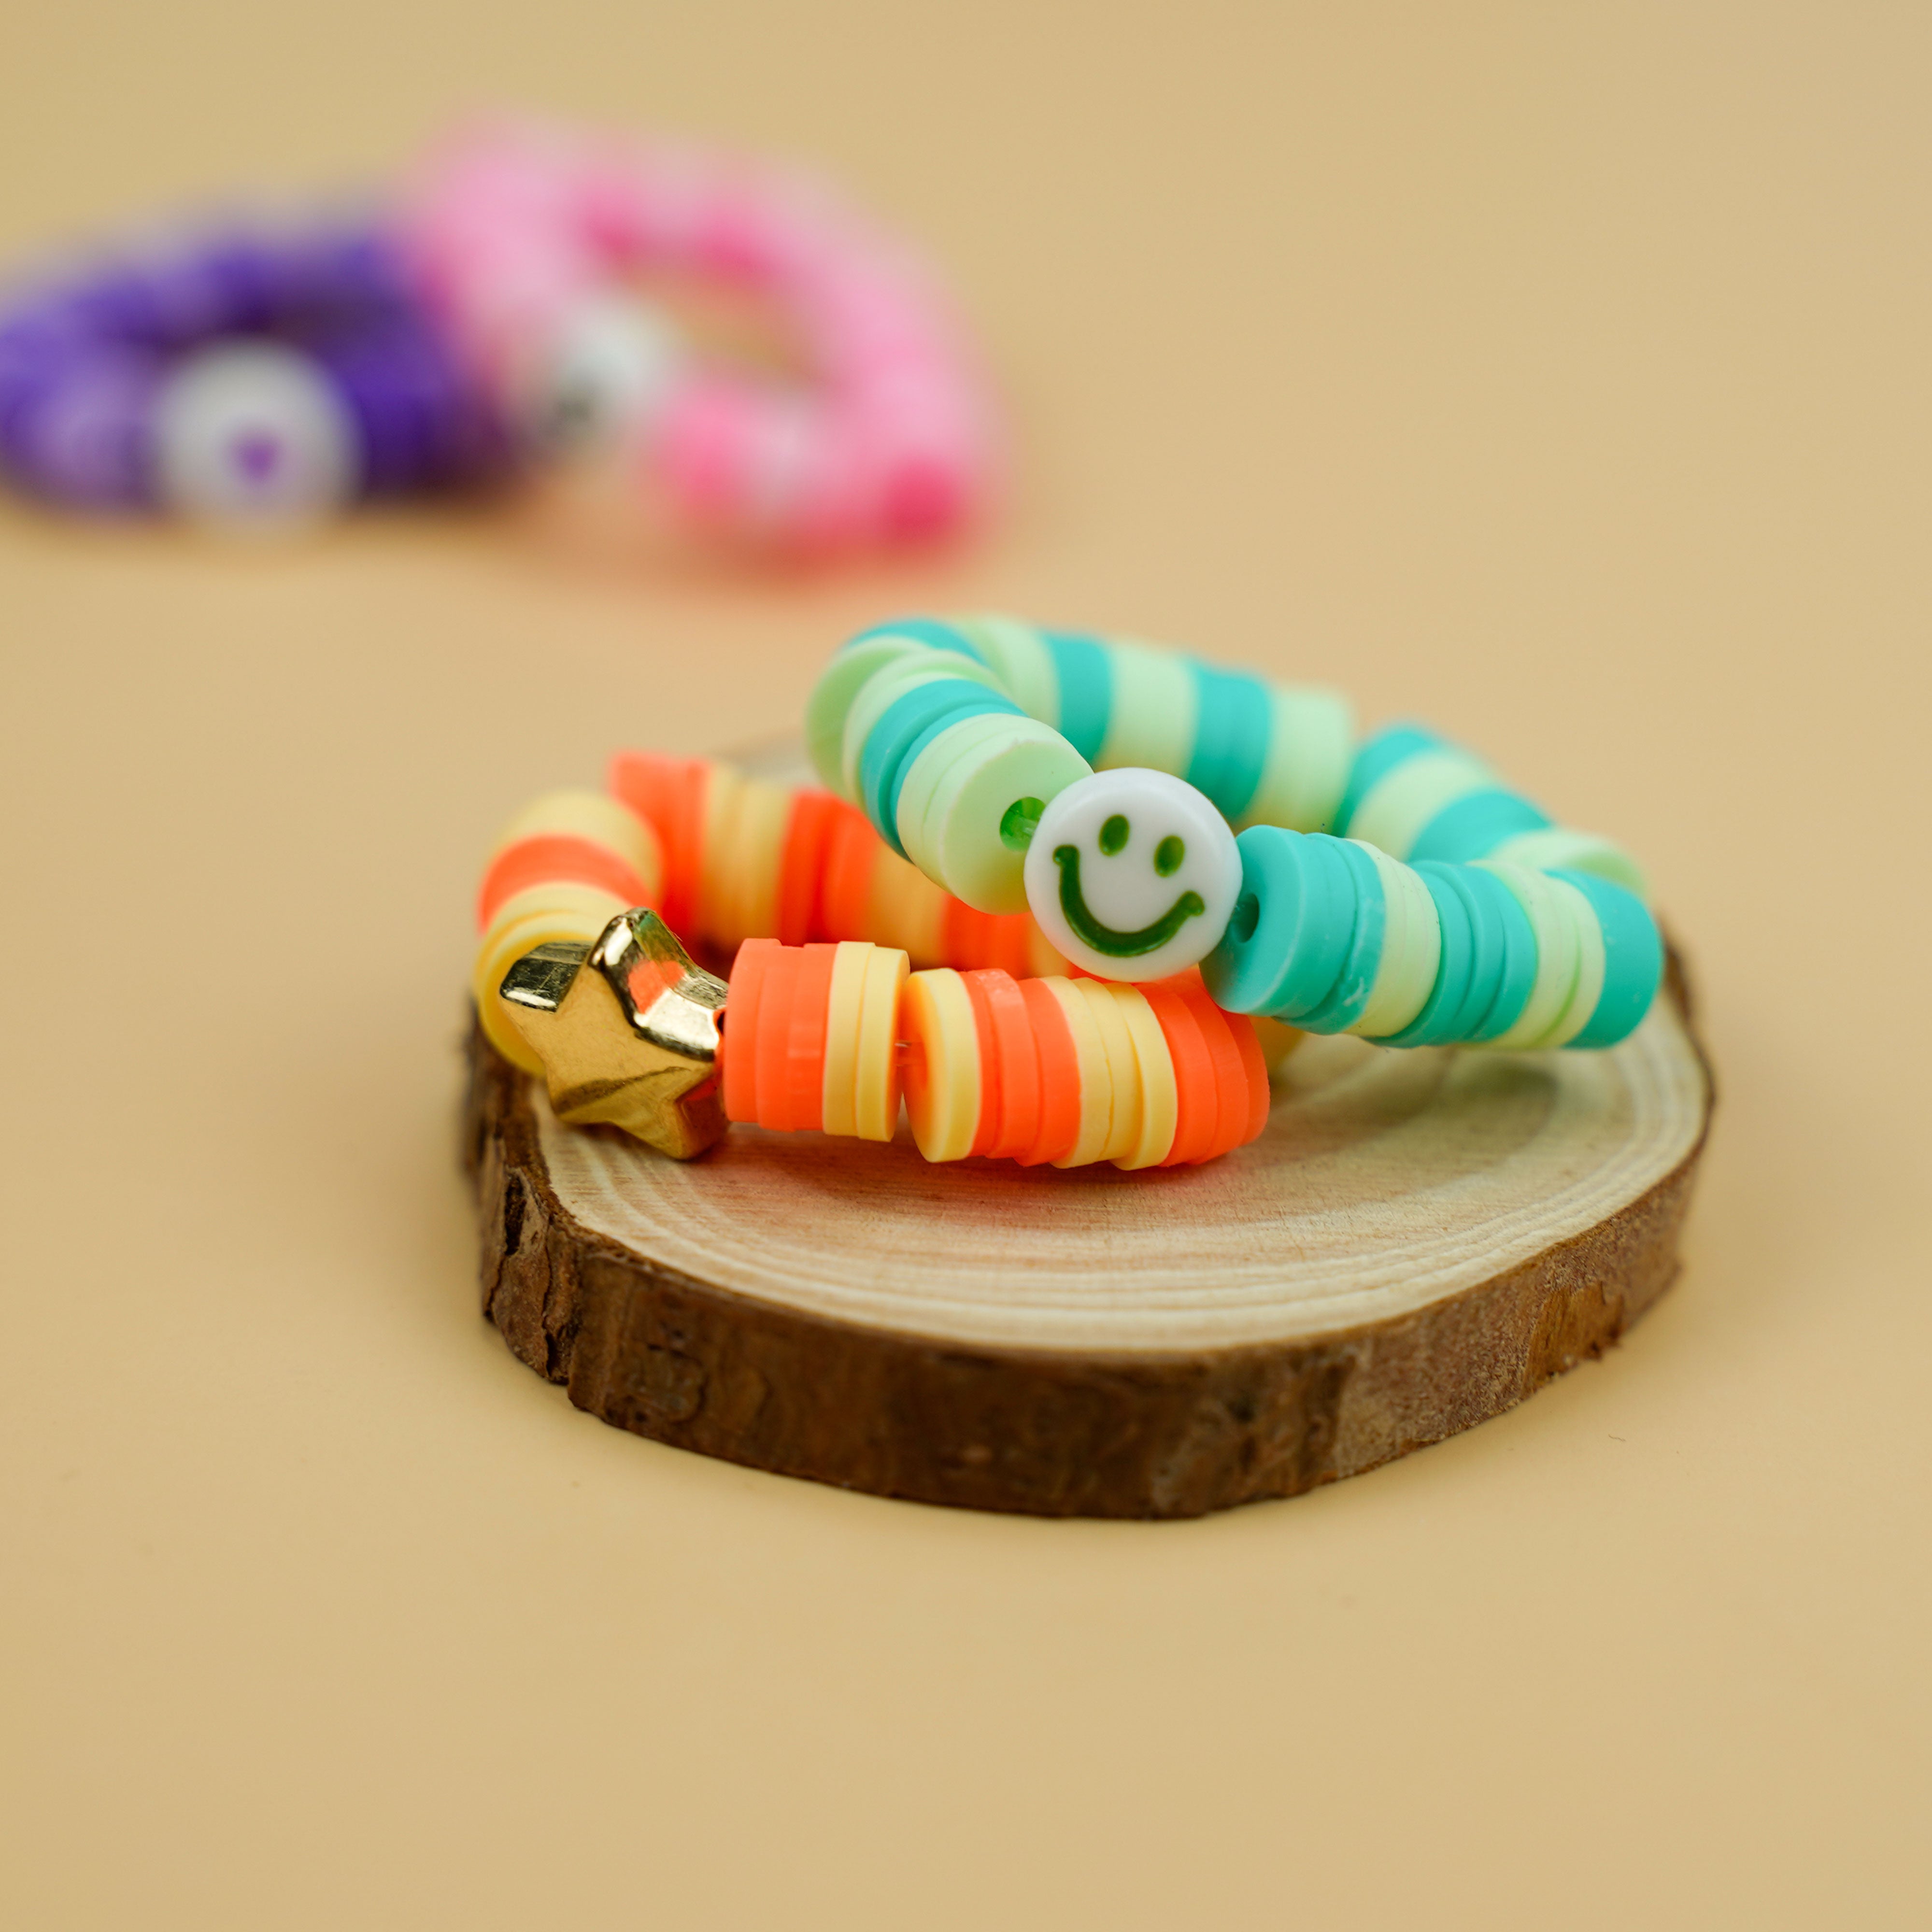 SUNNYCLUE 1 Set 450+ pcs Beaded Charm Bracelet Making Kit DIY Jewelry Arts  and Crafts Kits for Kids Girls Adults Children Friendship Bracelets- Make 8 Charm  Bracelet 